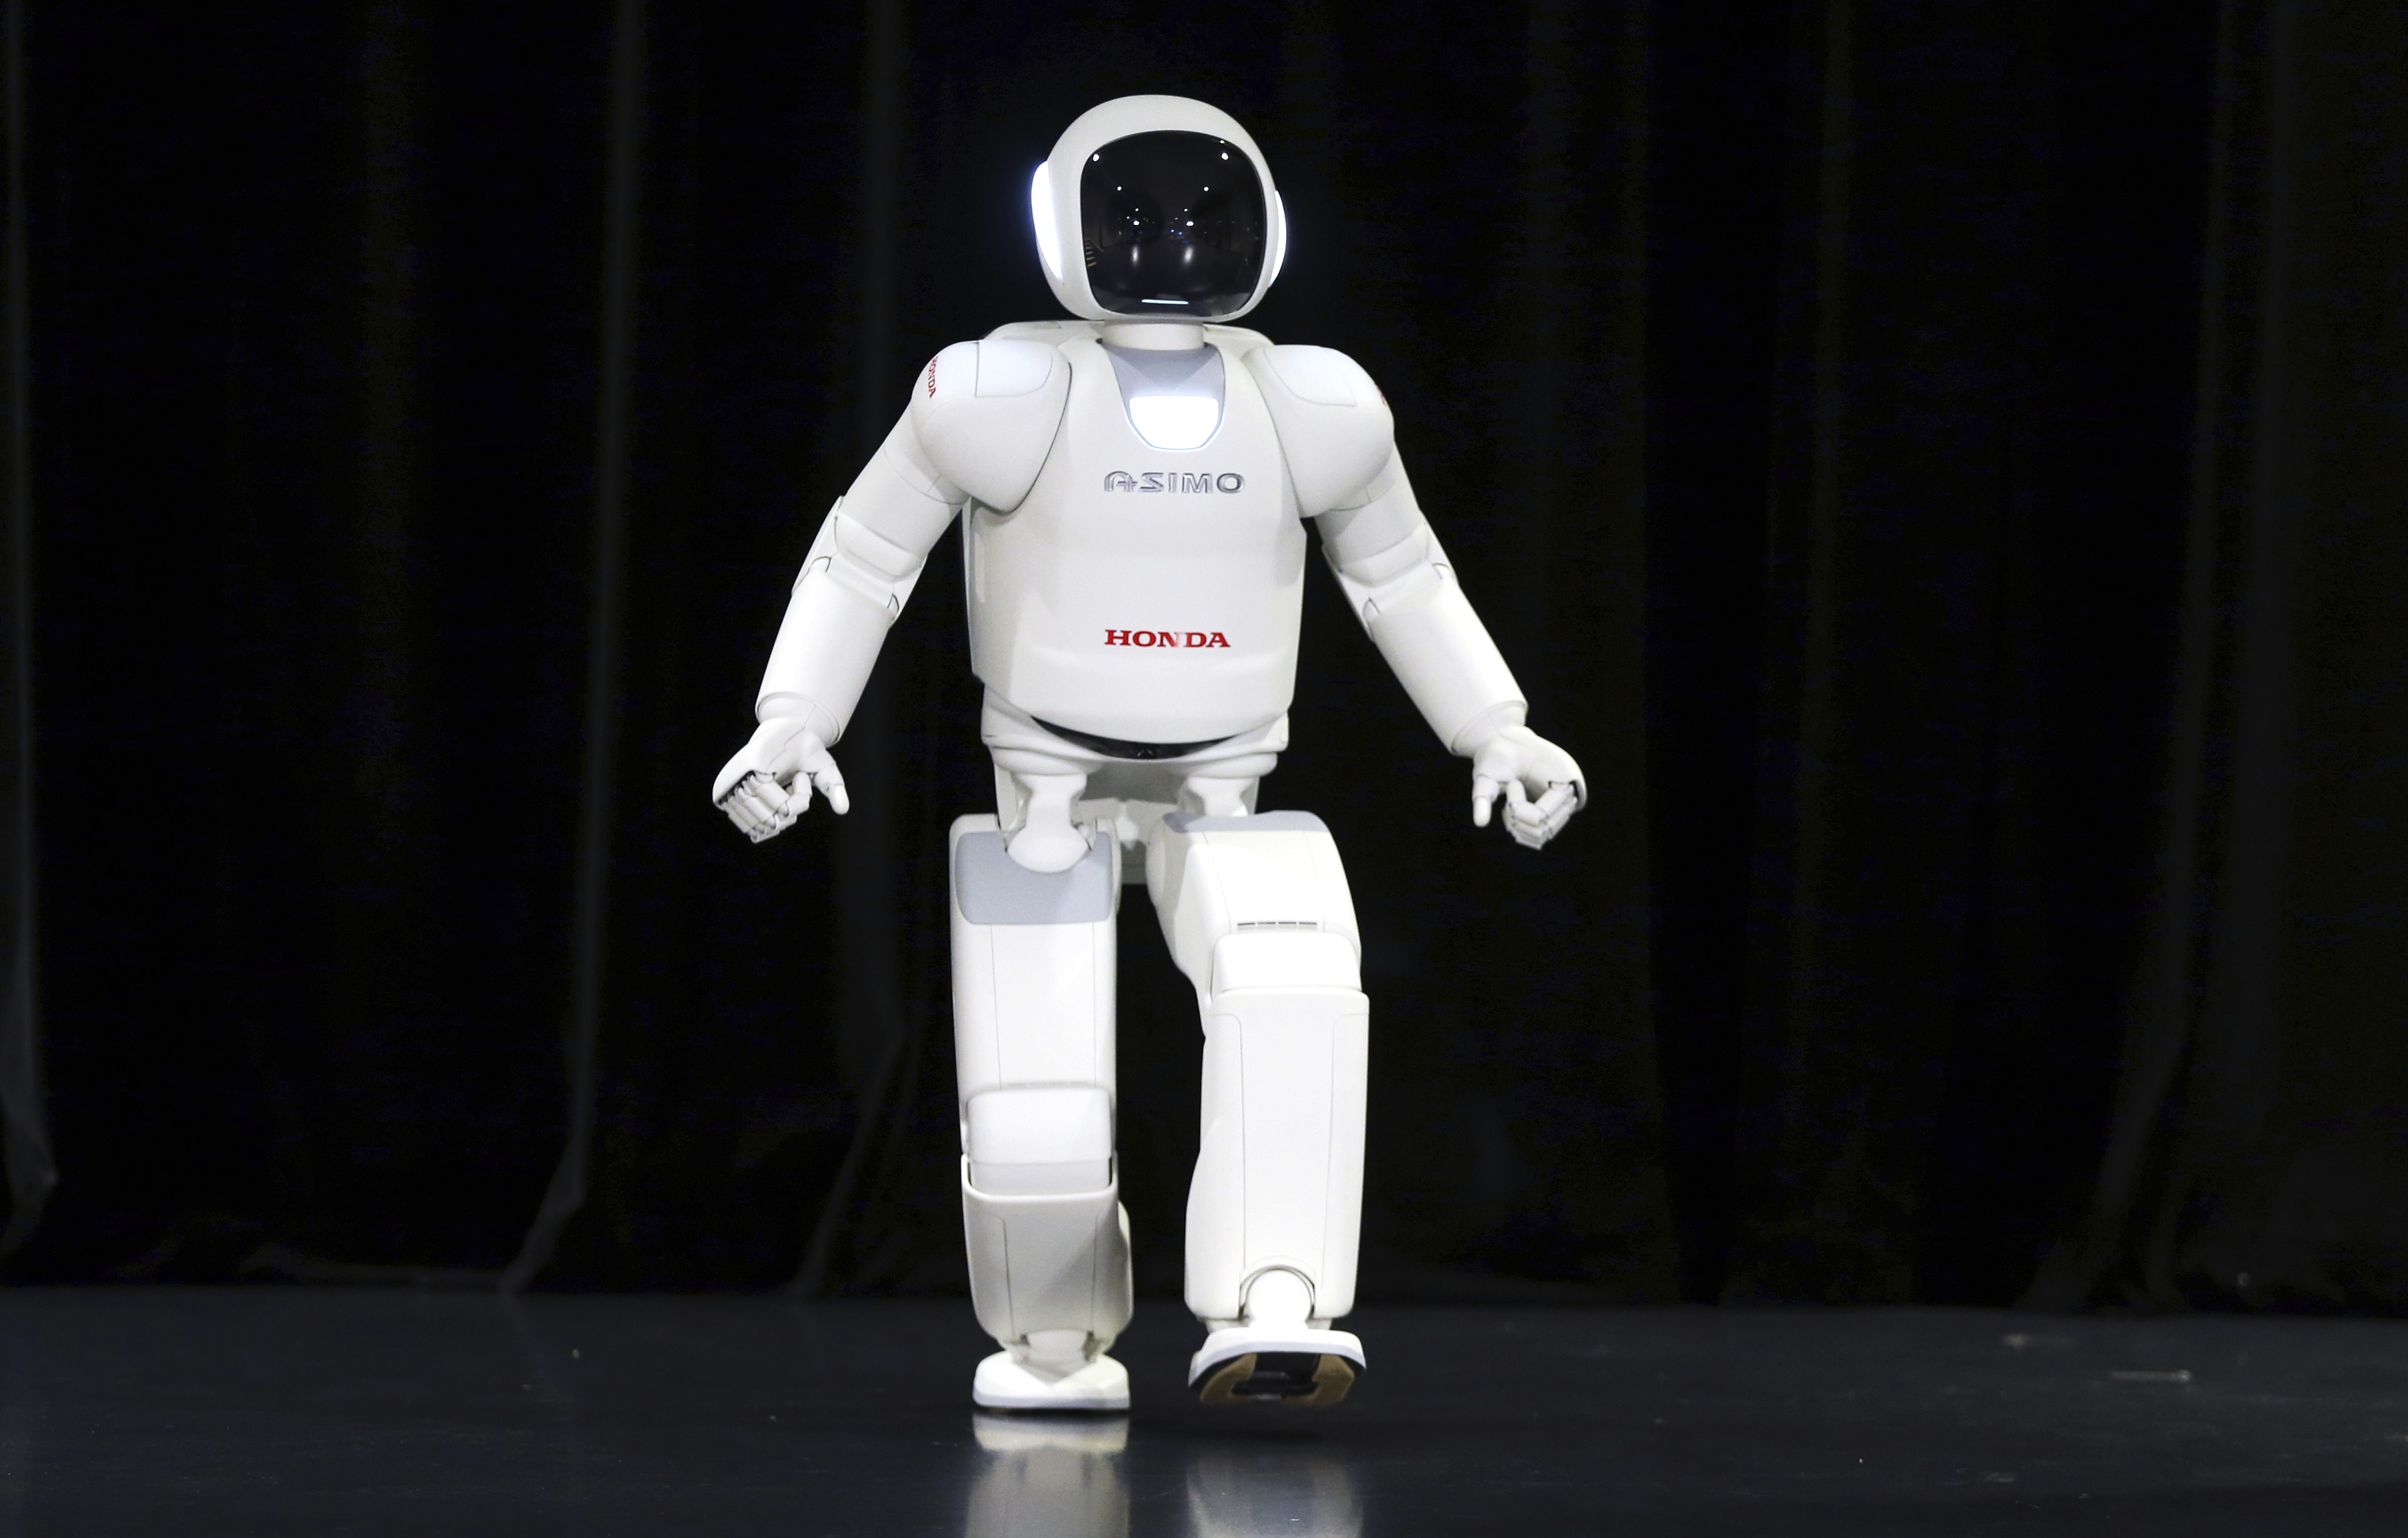 Human-Robot Partnerships: Design & Policy Implications